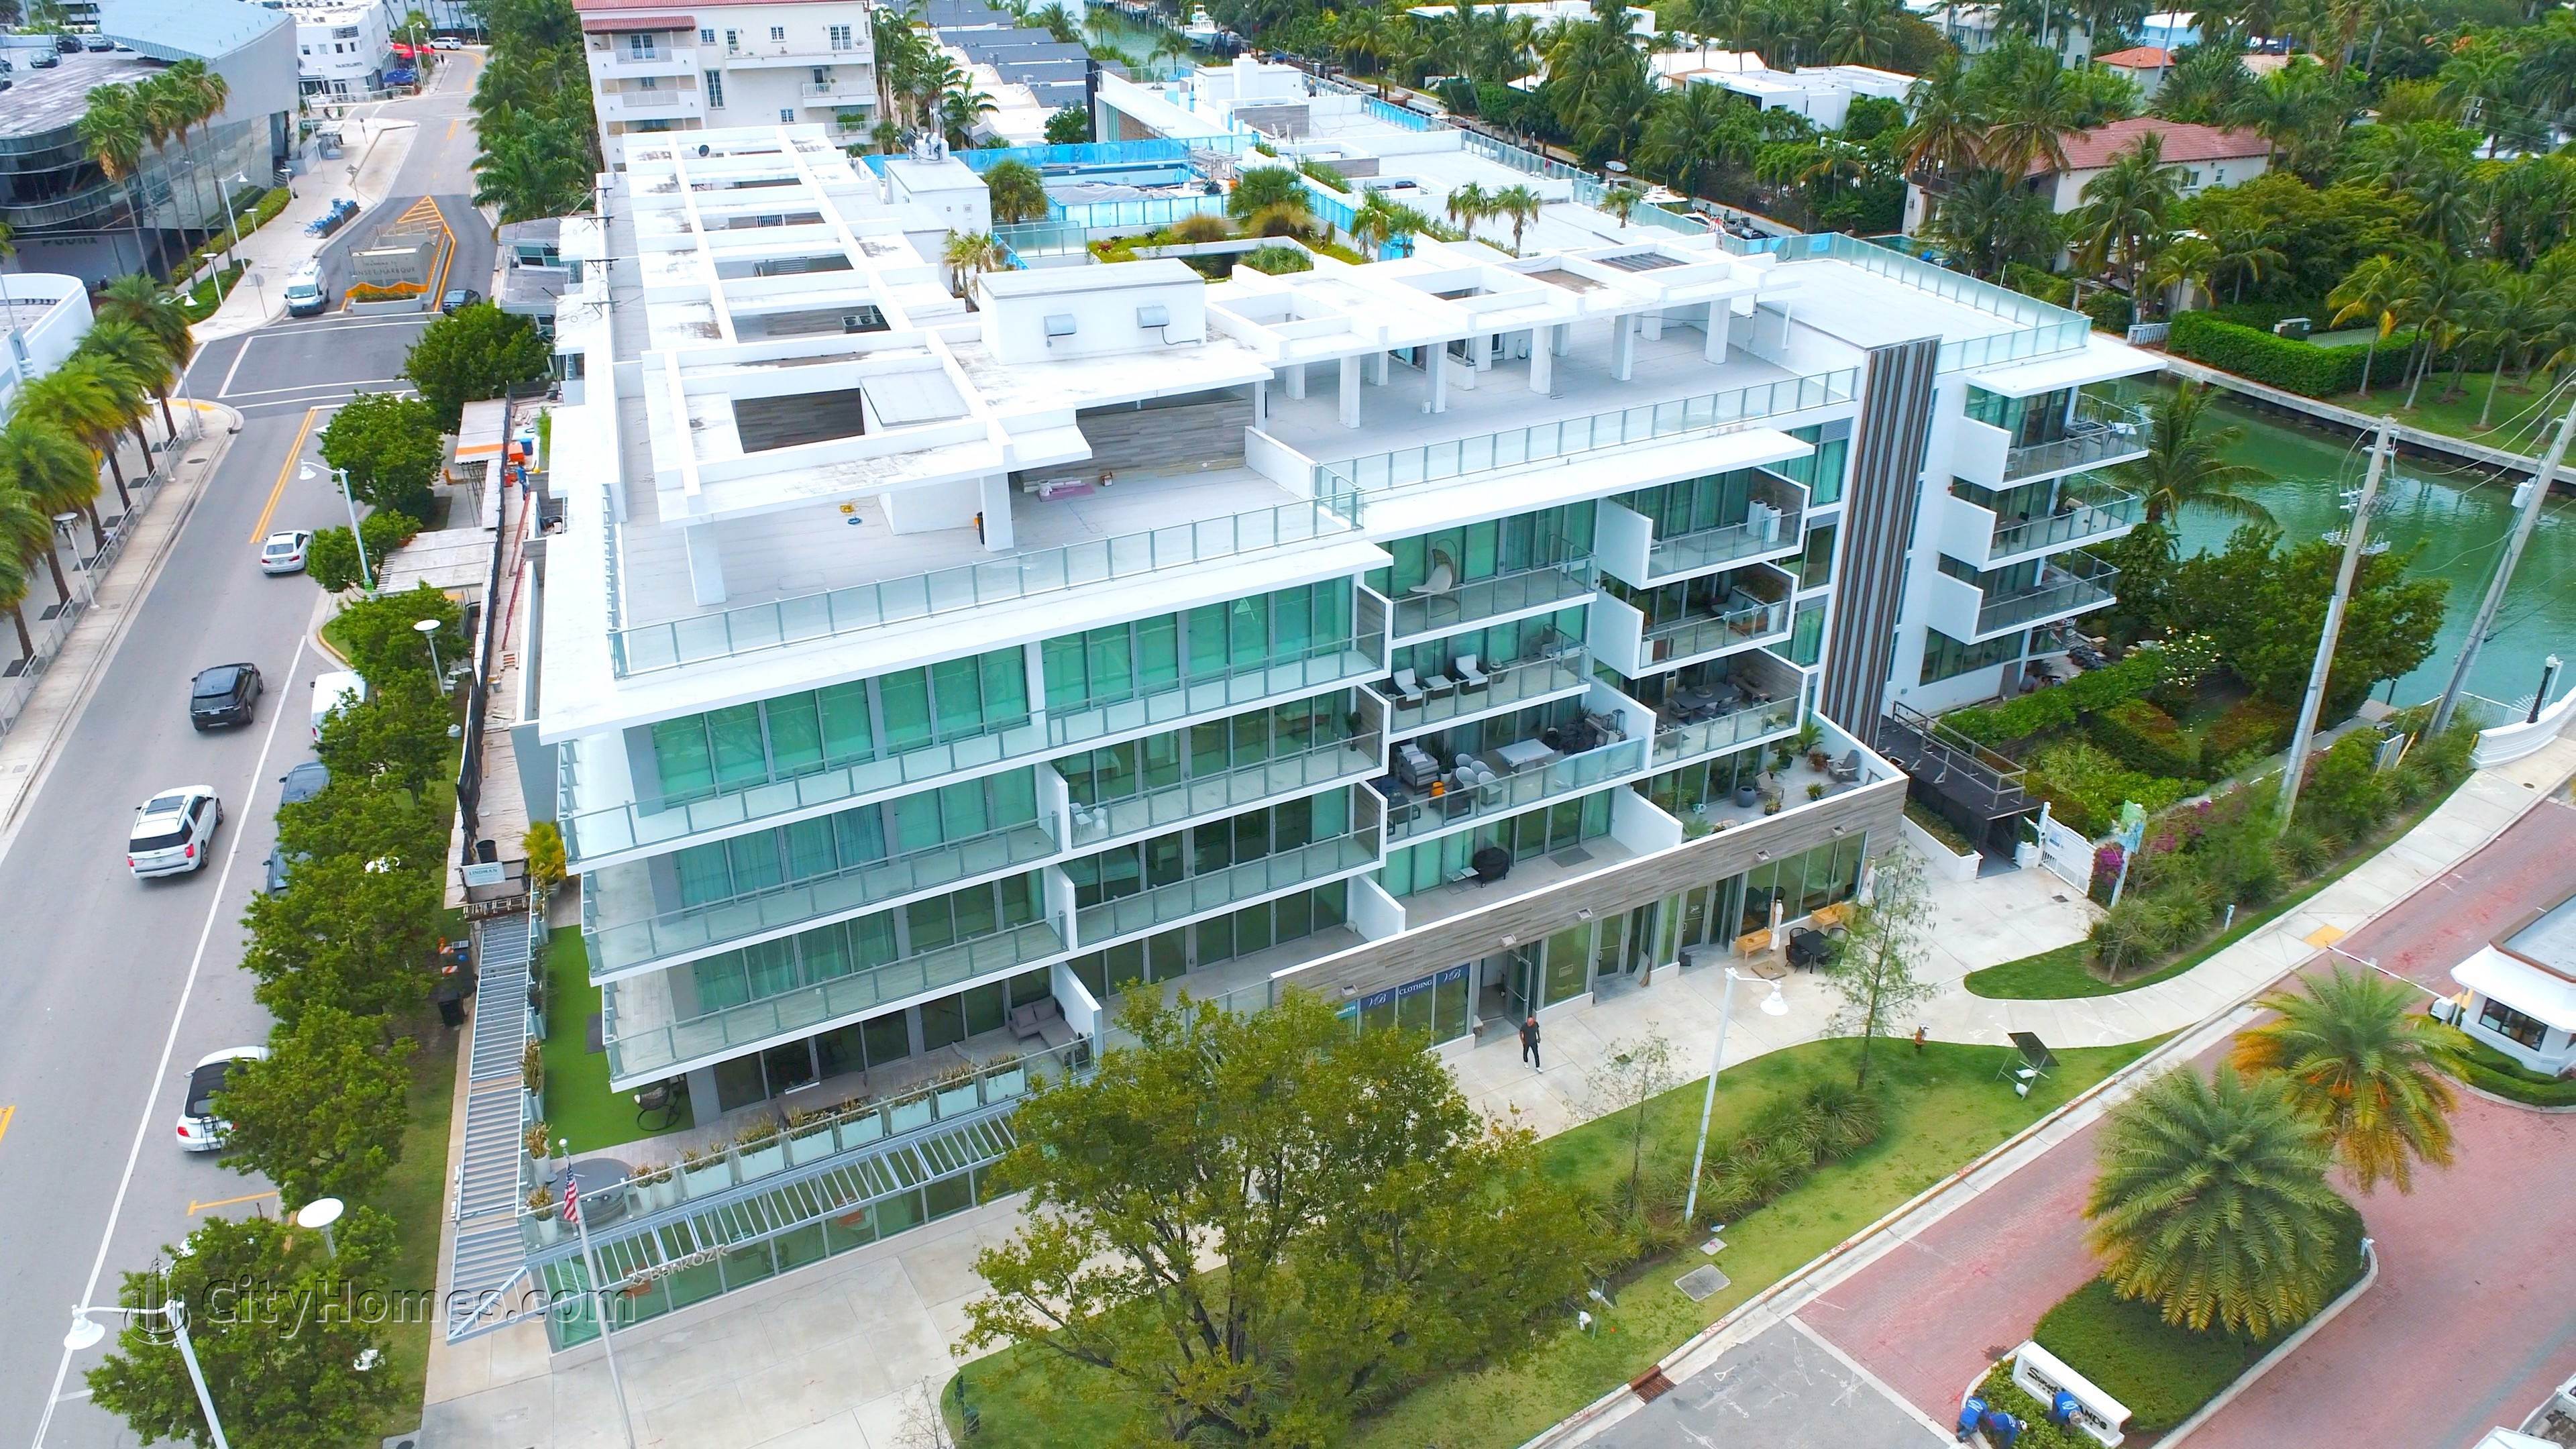 5. PALAU SUNSET HARBOUR building at 1201 20th Street, Mid Beach, Miami Beach, FL 33139